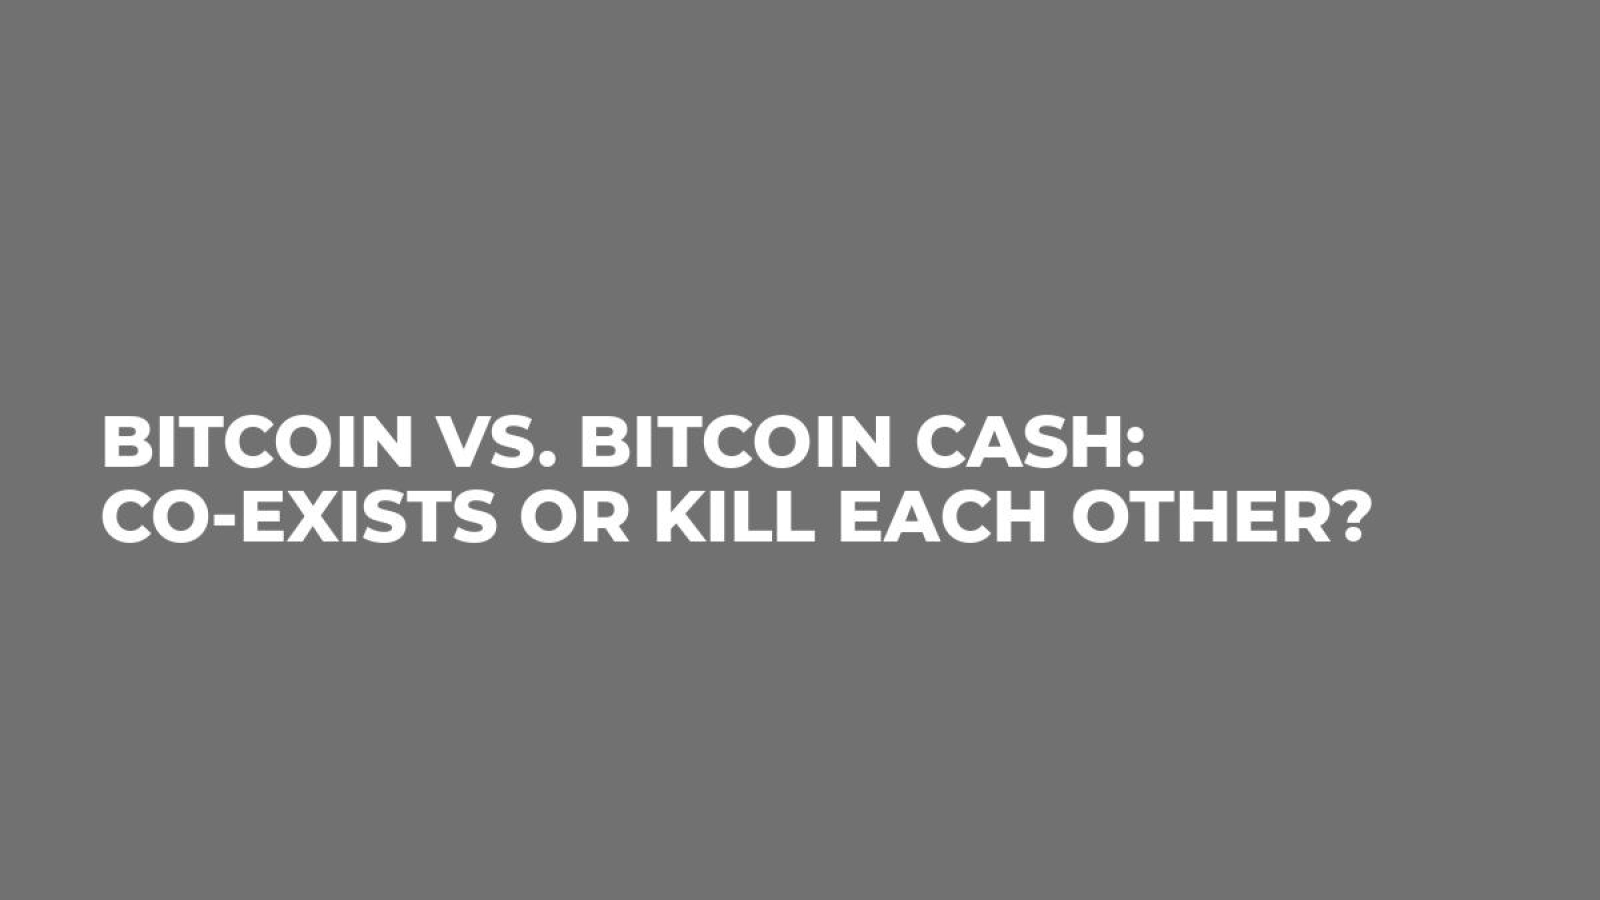 Bitcoin vs. Bitcoin Cash: Co-Exists or Kill Each Other?